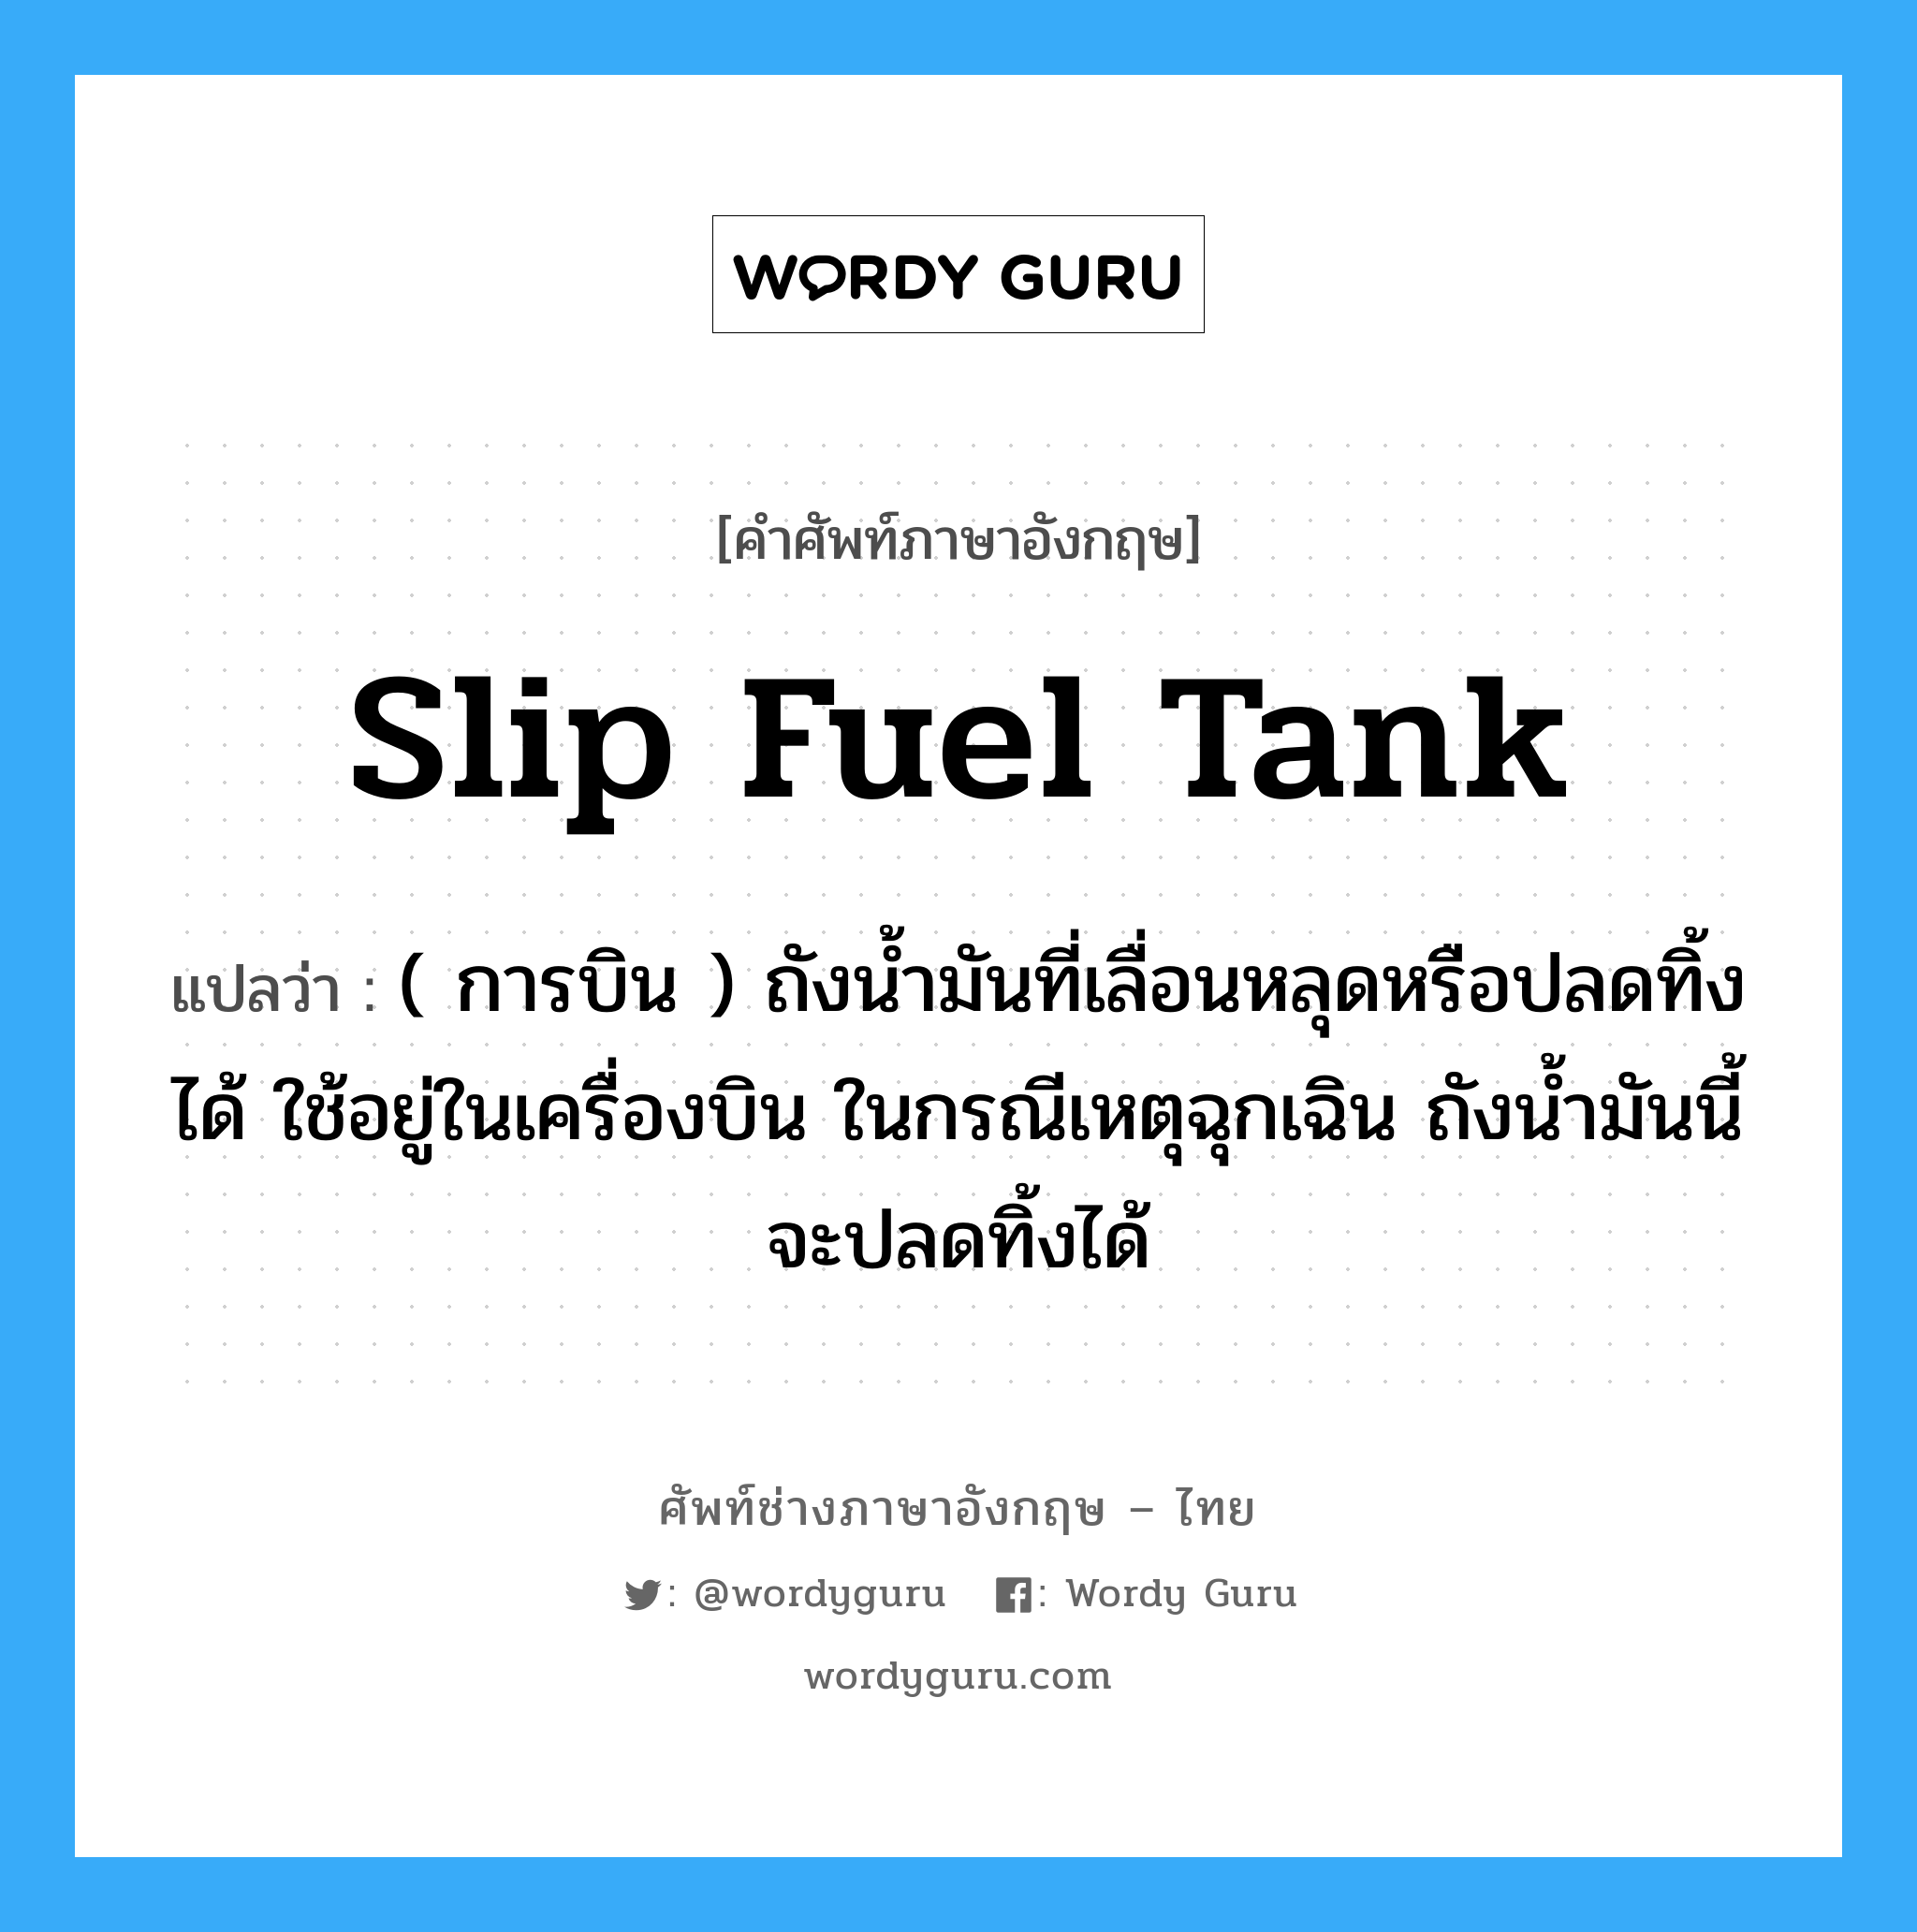 slip fuel tank แปลว่า?, คำศัพท์ช่างภาษาอังกฤษ - ไทย slip fuel tank คำศัพท์ภาษาอังกฤษ slip fuel tank แปลว่า ( การบิน ) ถังน้ำมันที่เลื่อนหลุดหรือปลดทิ้งได้ ใช้อยู่ในเครื่องบิน ในกรณีเหตุฉุกเฉิน ถังน้ำมันนี้จะปลดทิ้งได้